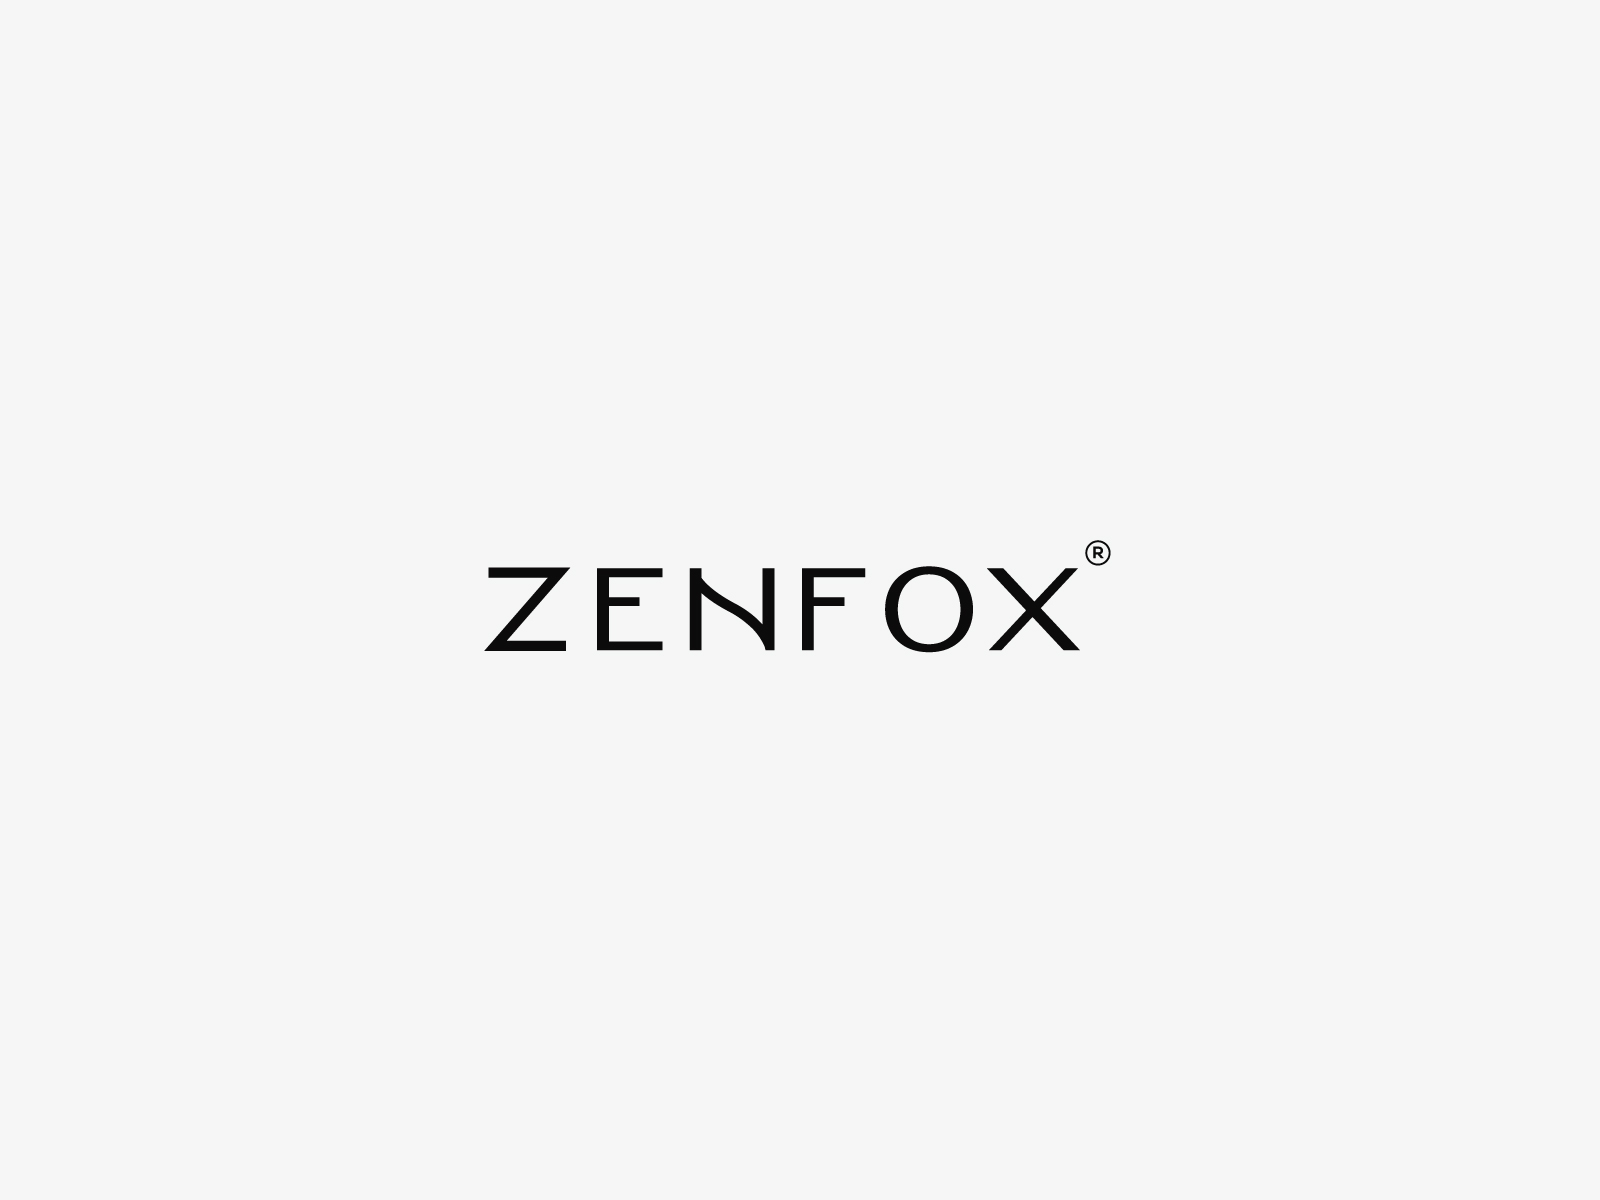 Zenfox - Apparel Brand logo by Jahid Hasan on Dribbble